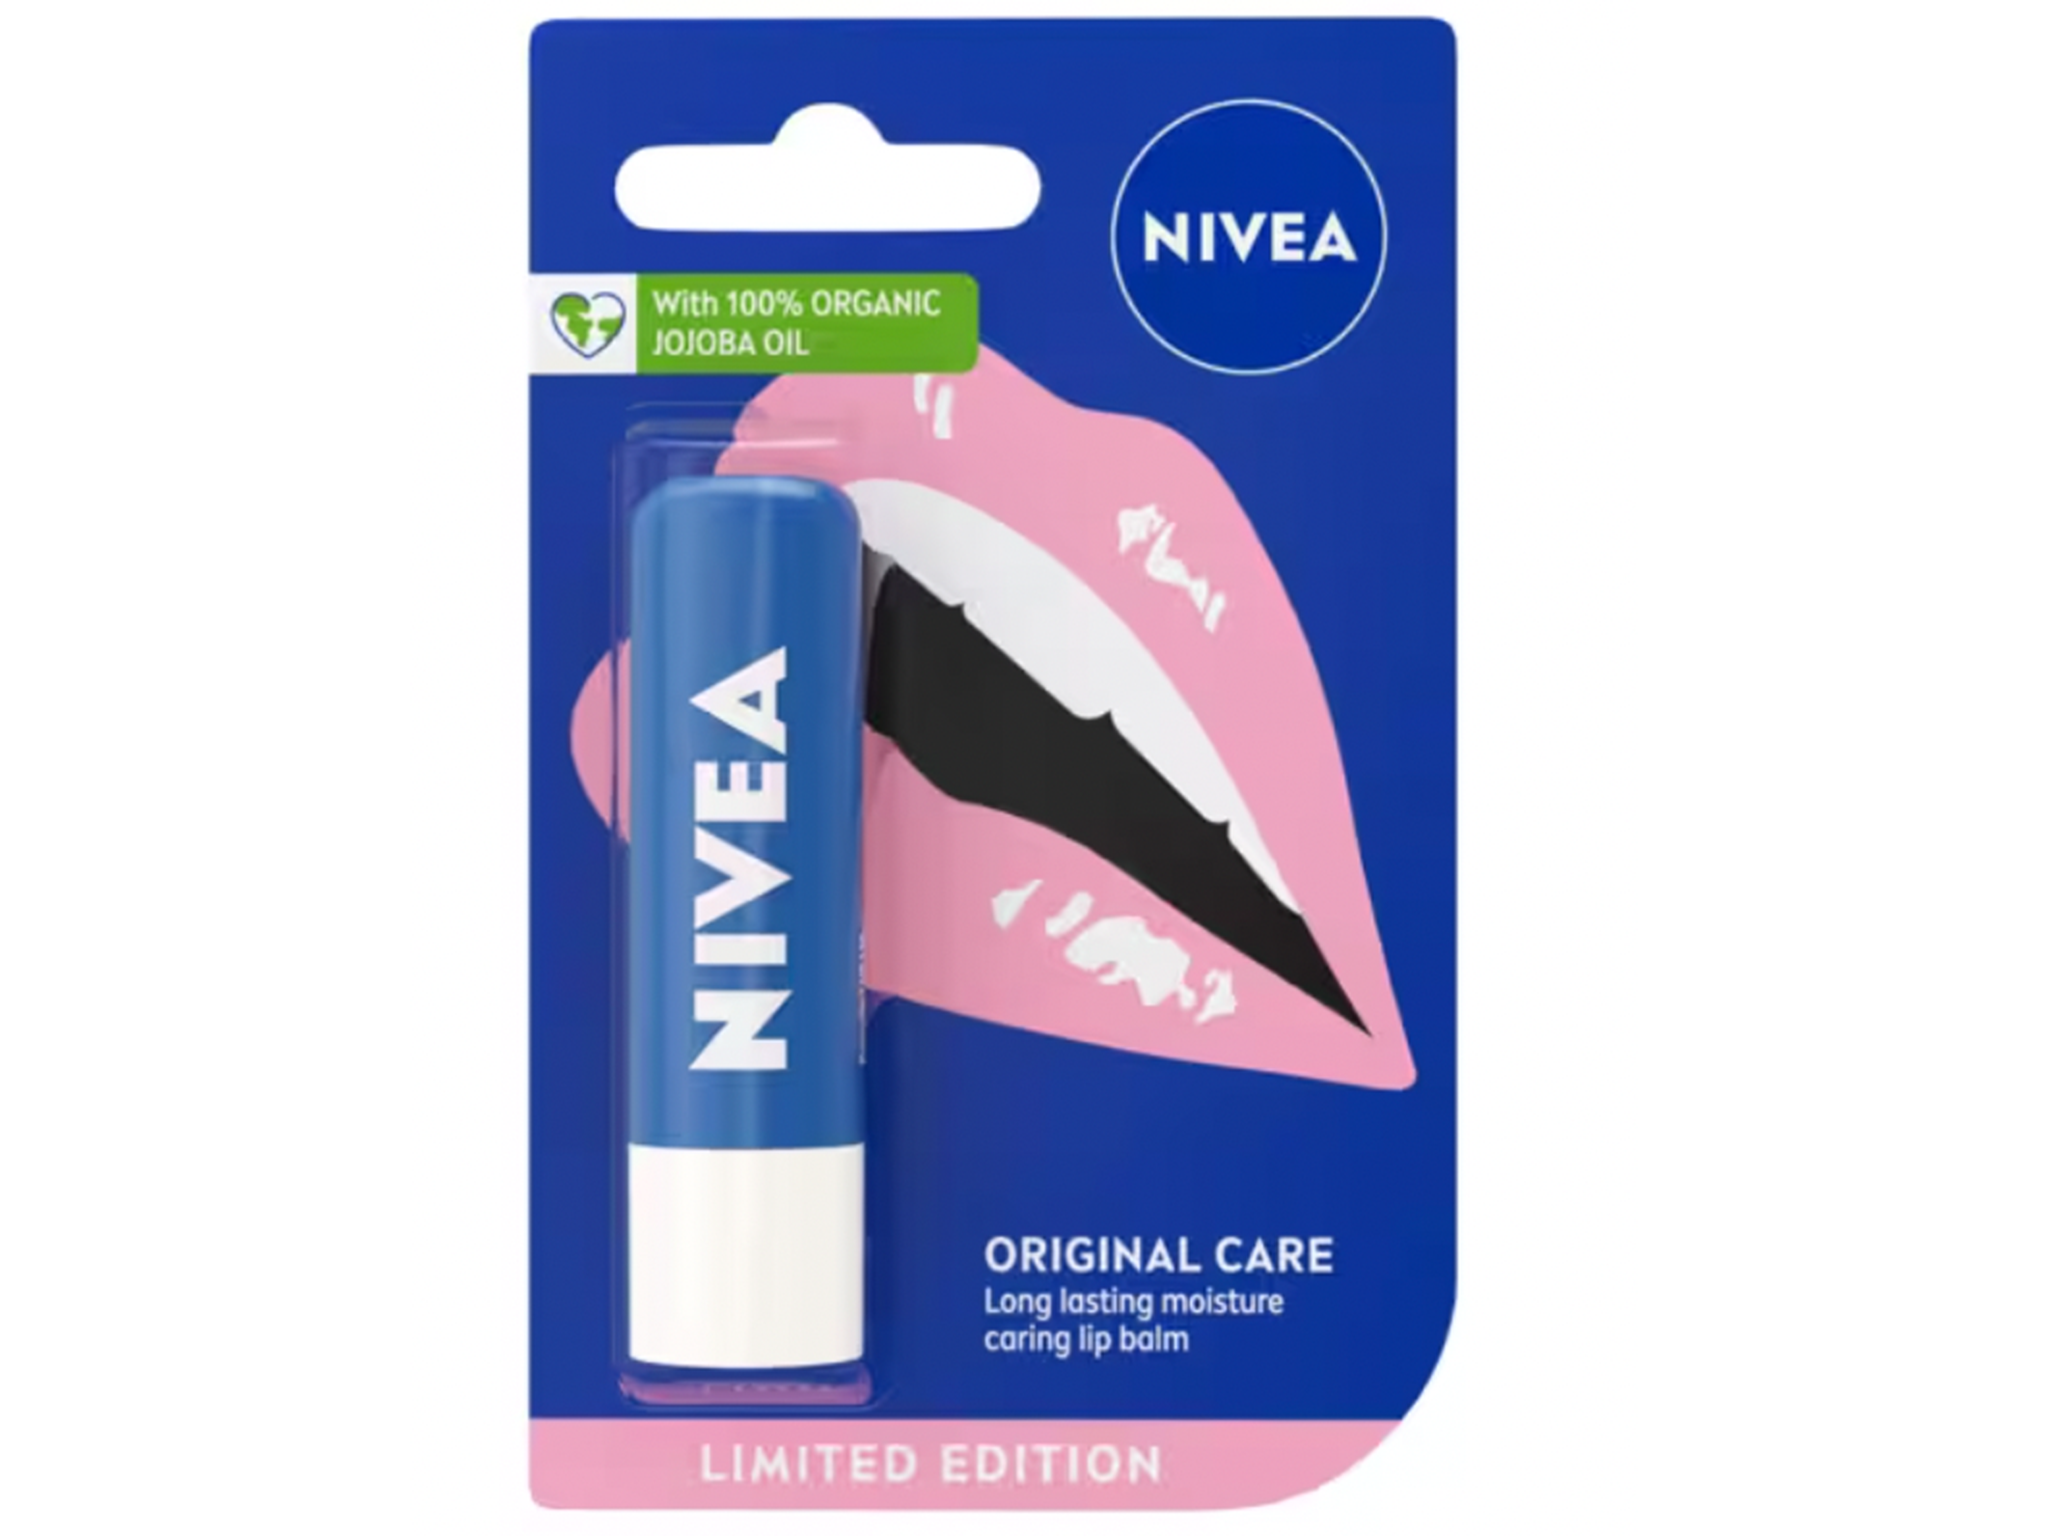 Bargain beauty buys Nivea original care lip balm with jojoba oil